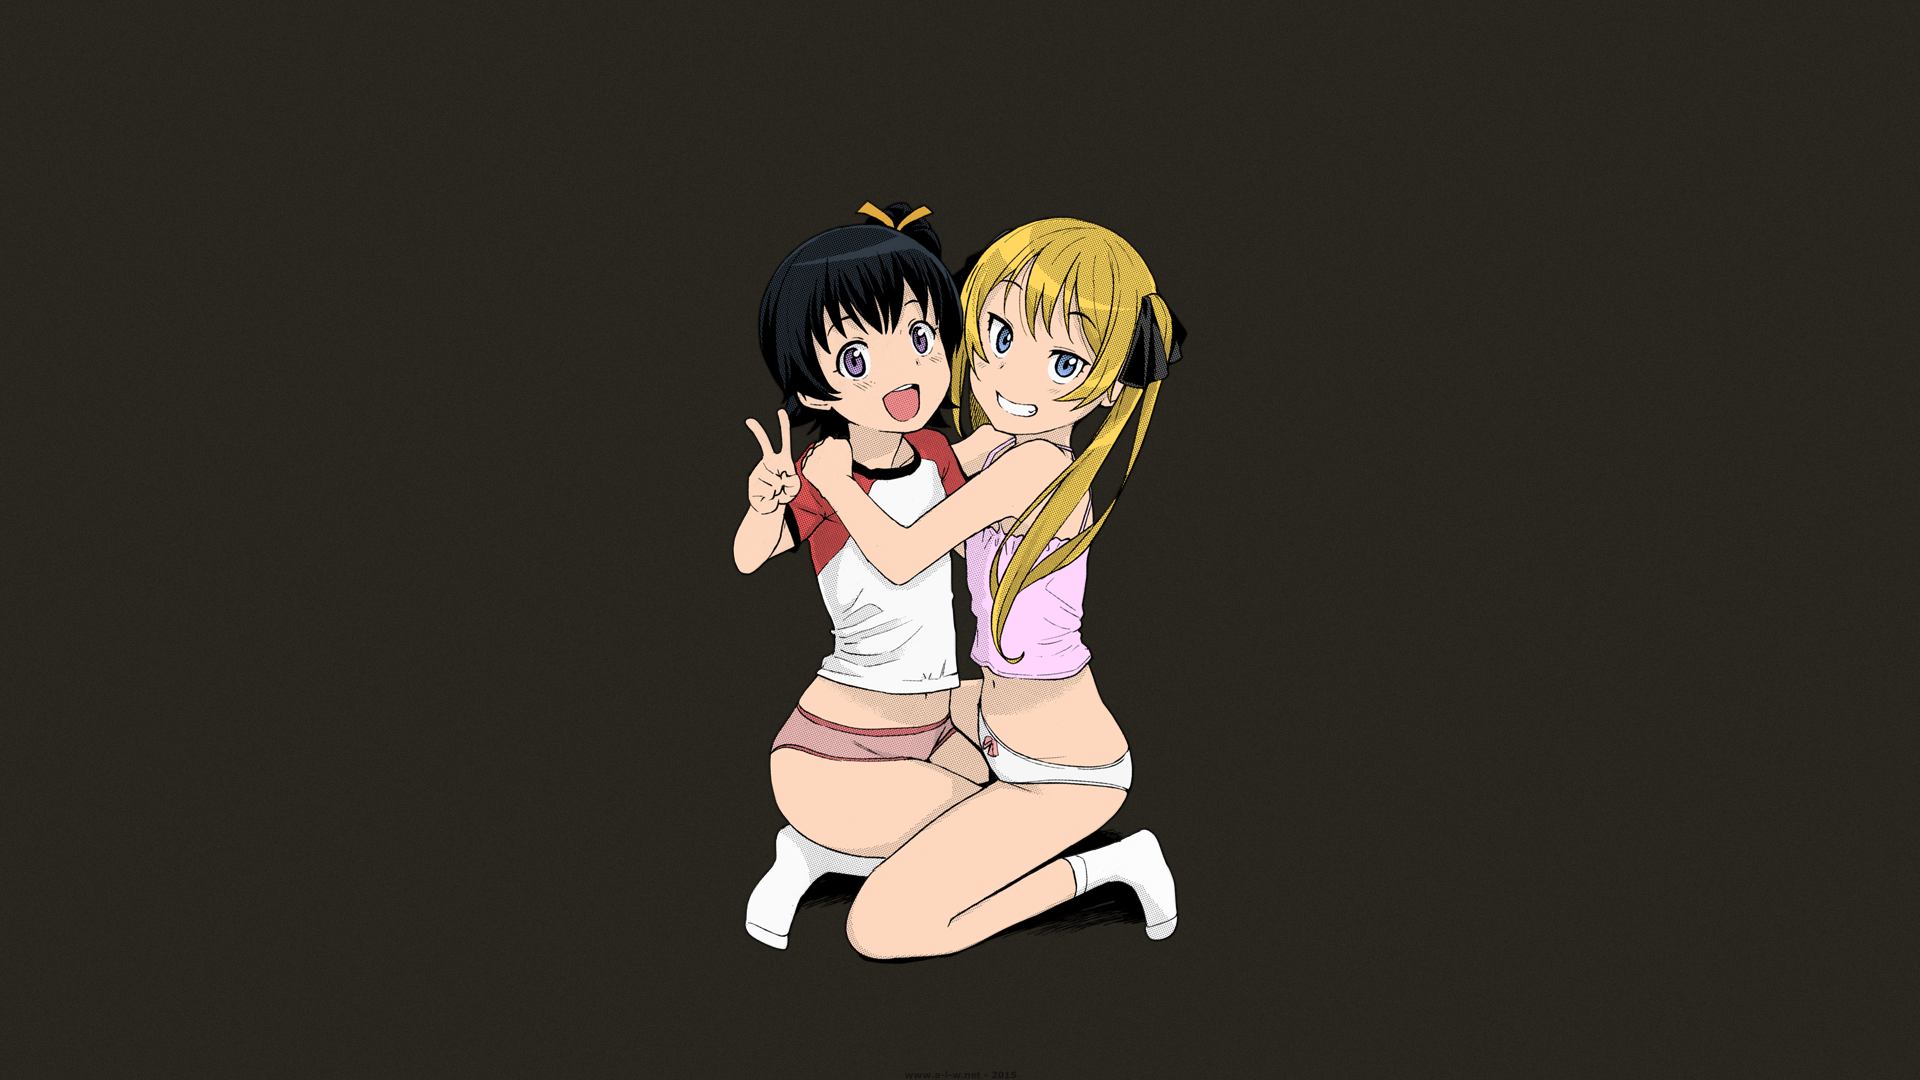 Anime 1920x1080 panties underwear short hair dark hair blonde anime girls manga ecchi anime two women brown background hand gesture black hair socks friendship